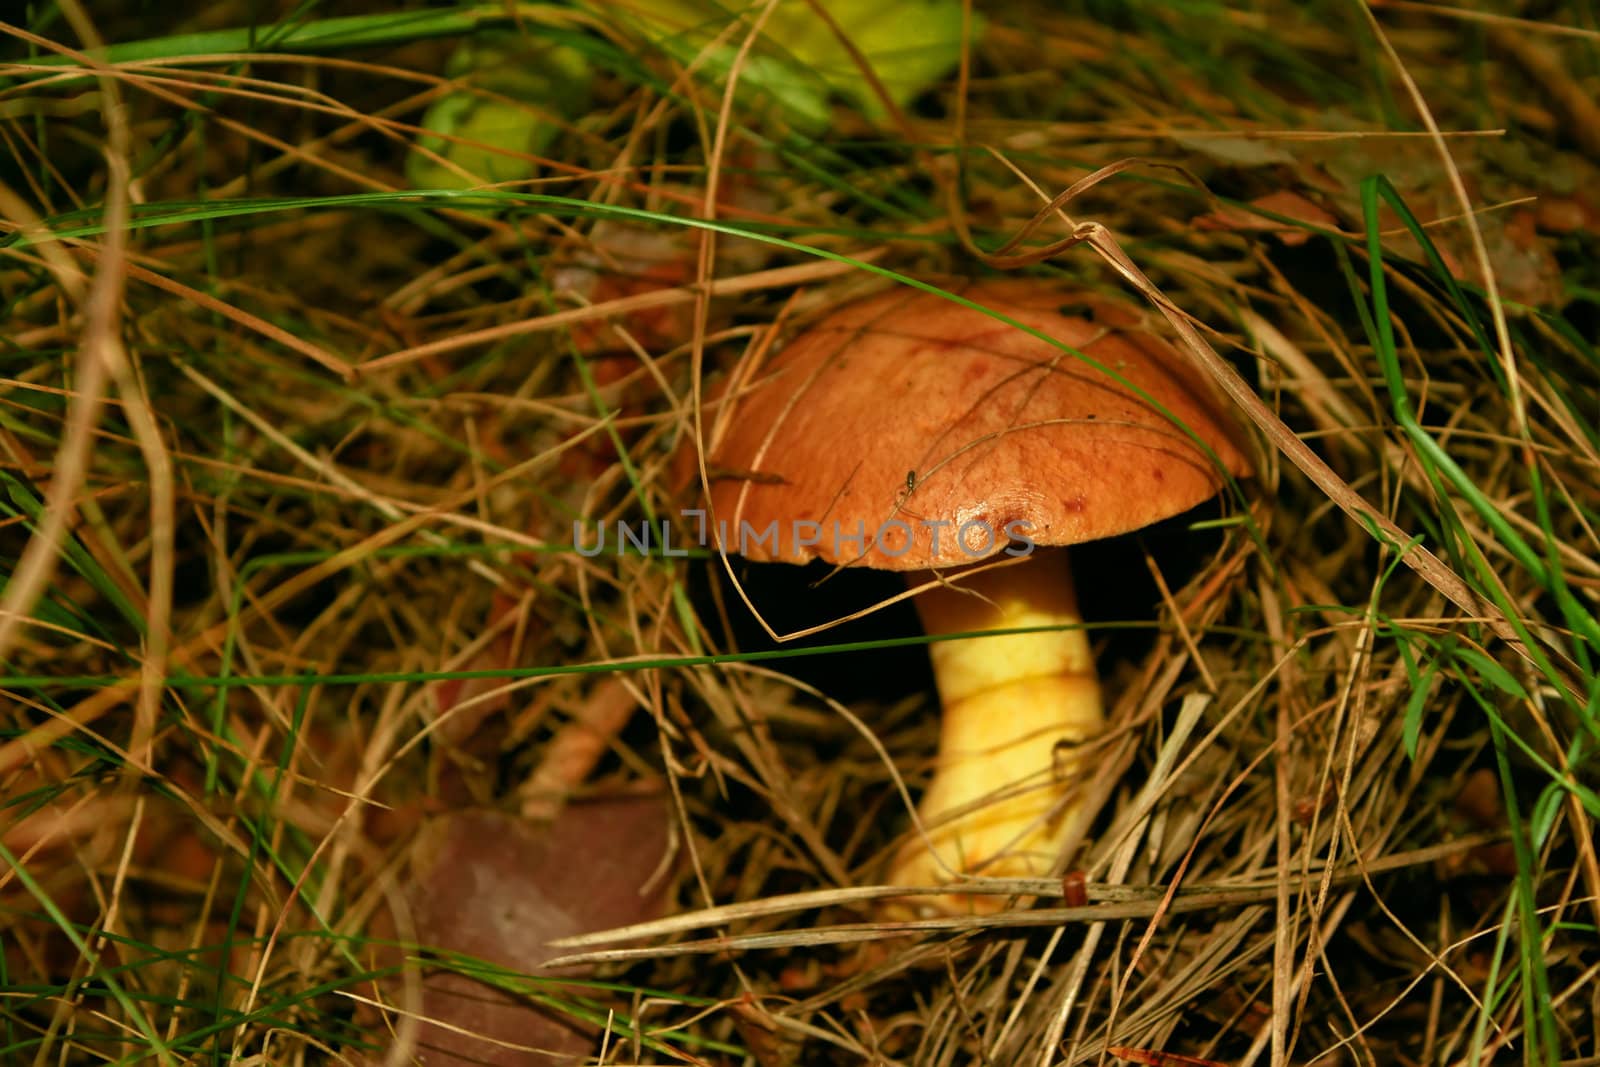 Slippery jack or Butter mushroom, brown-yellow boletus. Mushroom in its natural environment